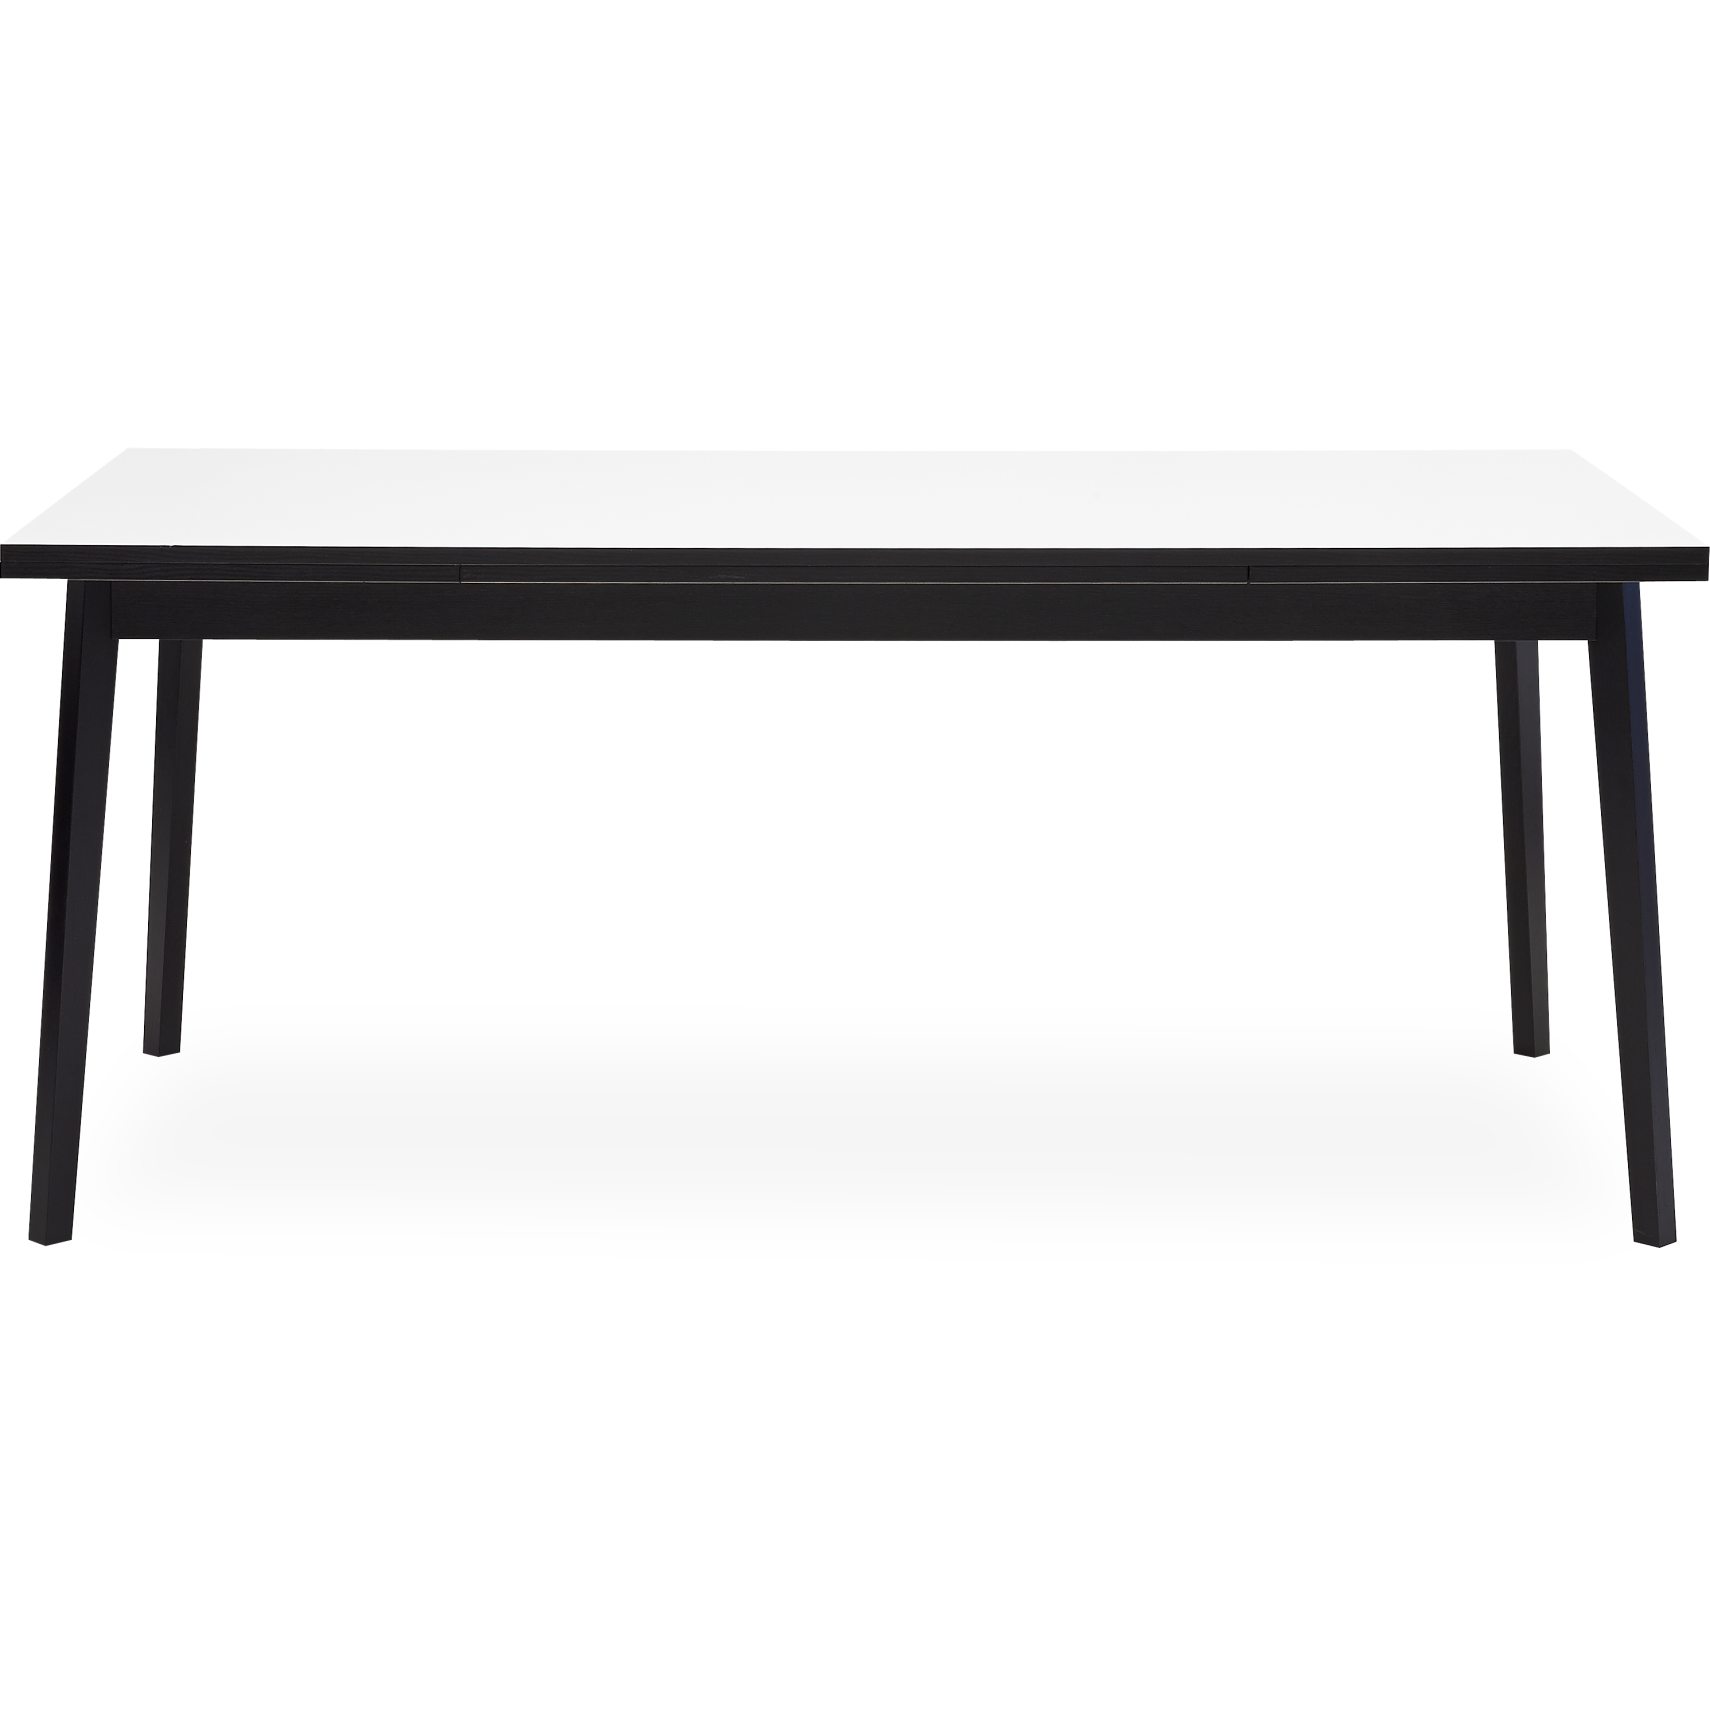 Single Matbord 180 x 90 x 76 cm - Vit melamin, svart kant och ben i svartbetsad ek